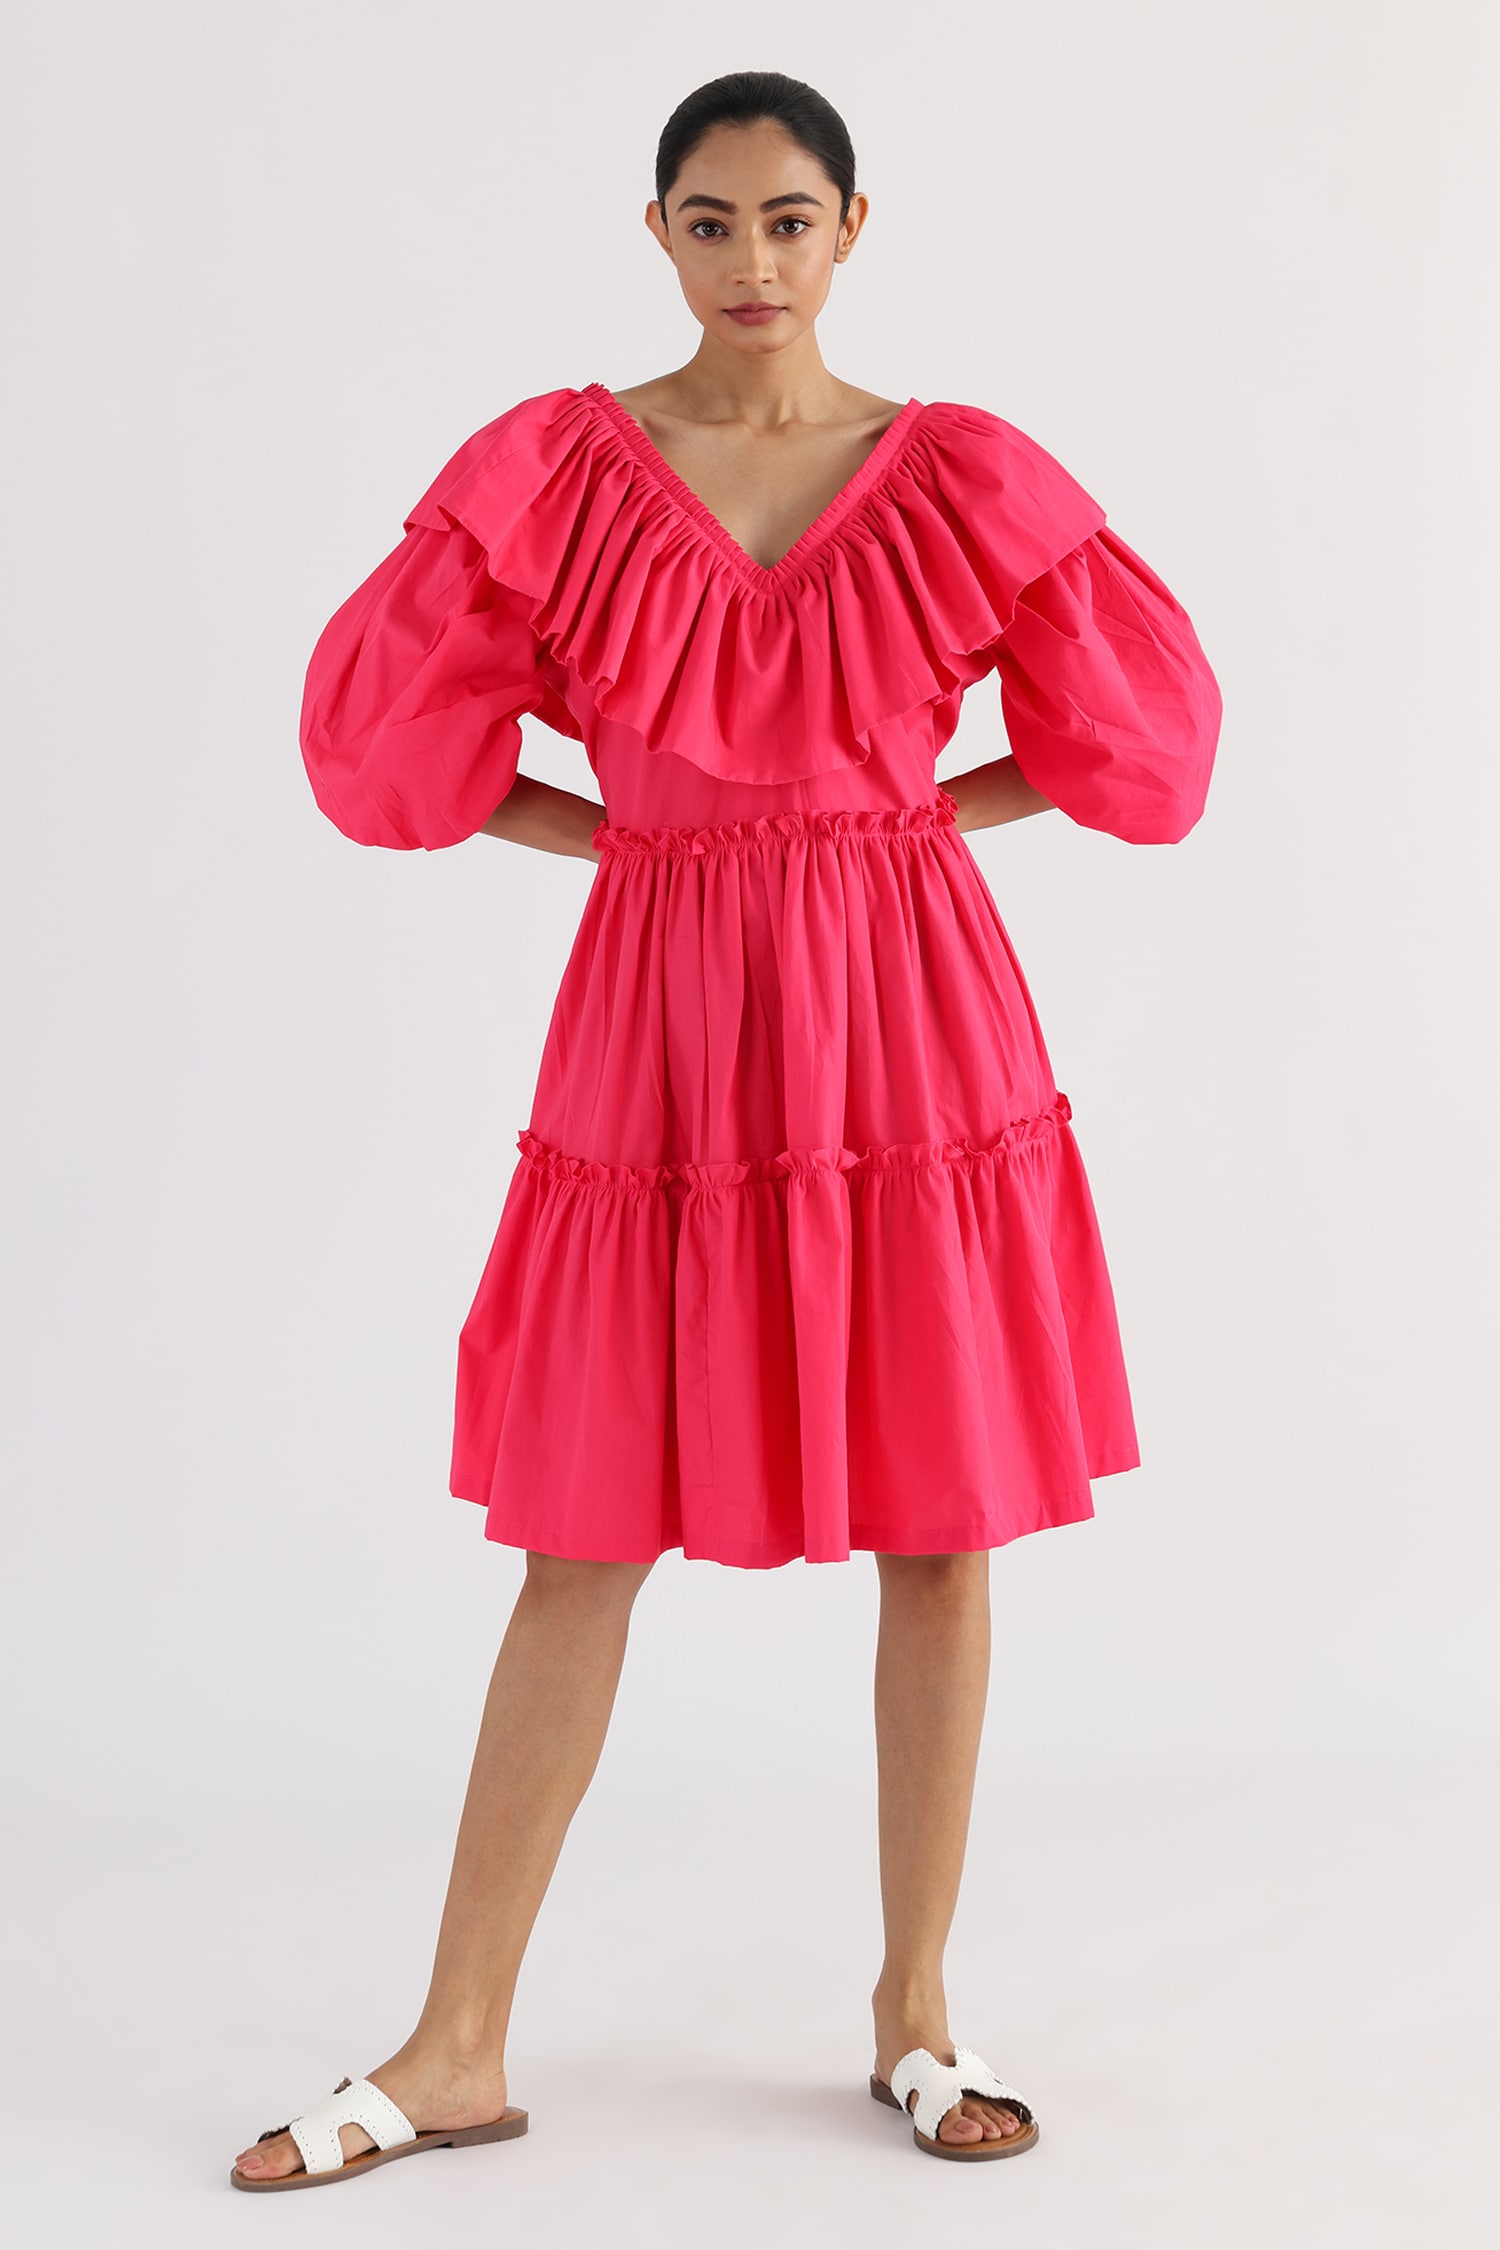 Buy The Eunoia Puff Sleeve Dress by Studio Moda India at Aza Fashions